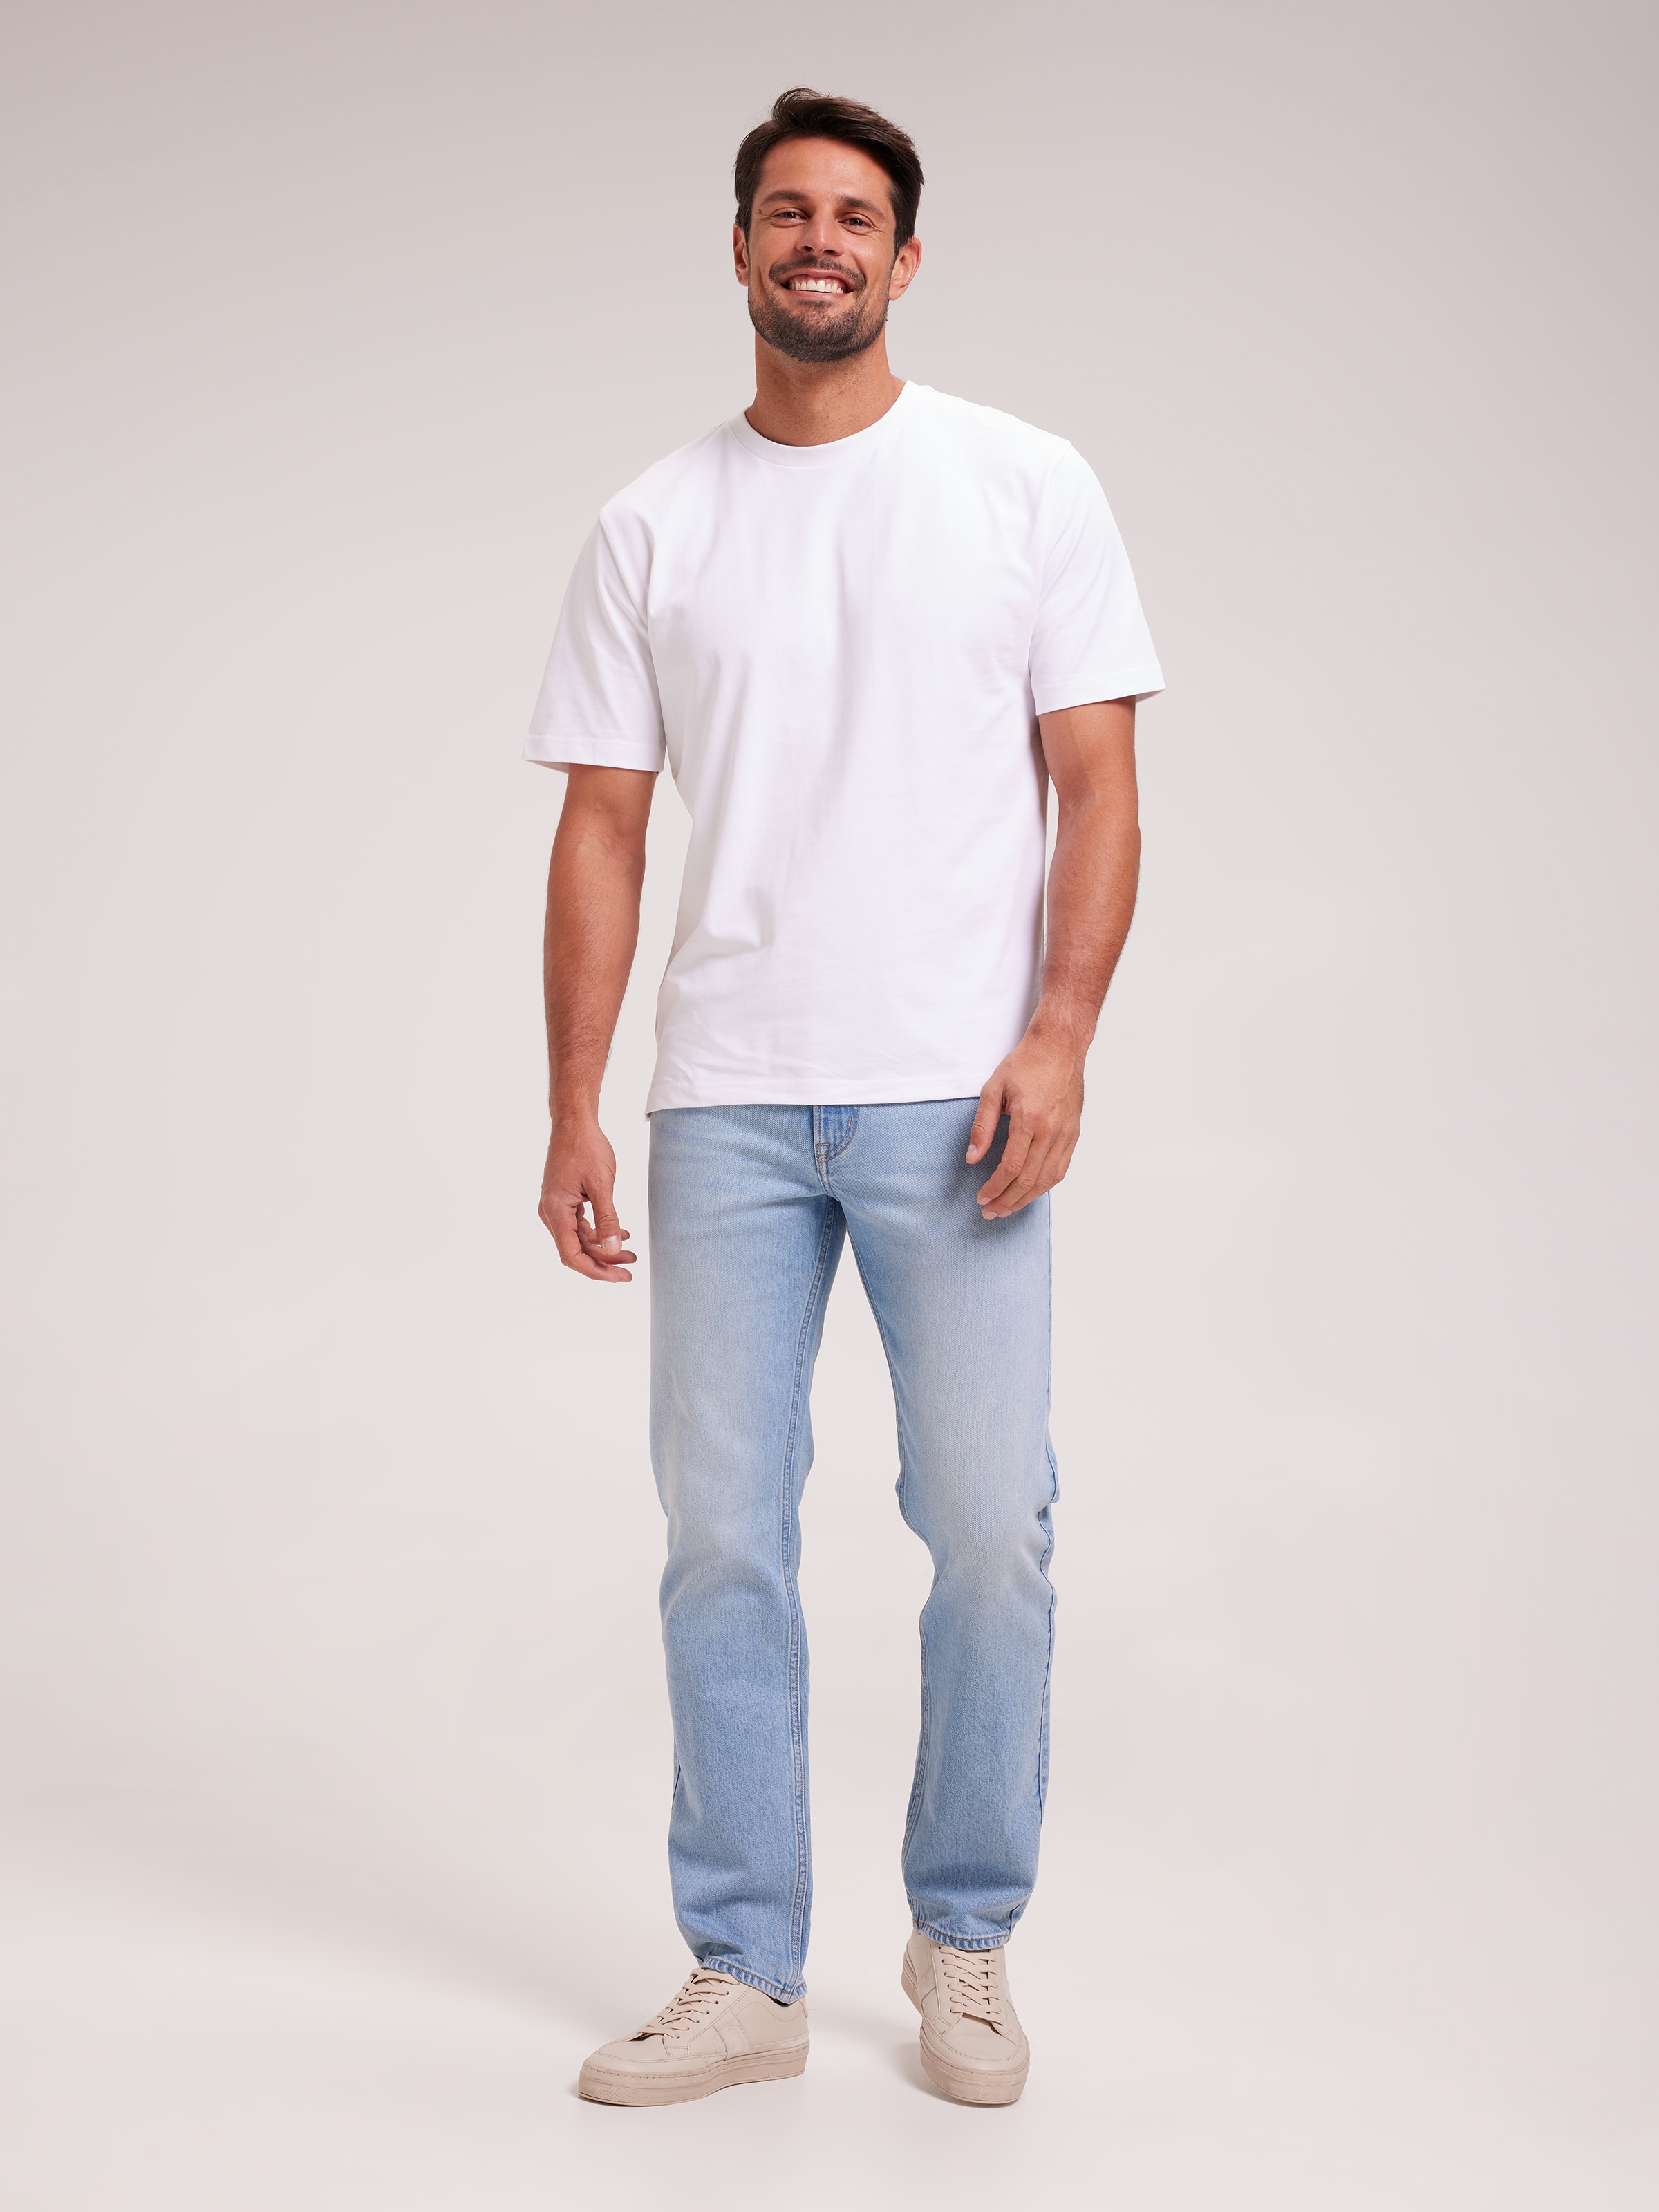 Jack & Jones®  Shop Men's Denim Pairs of Jeans on Sale